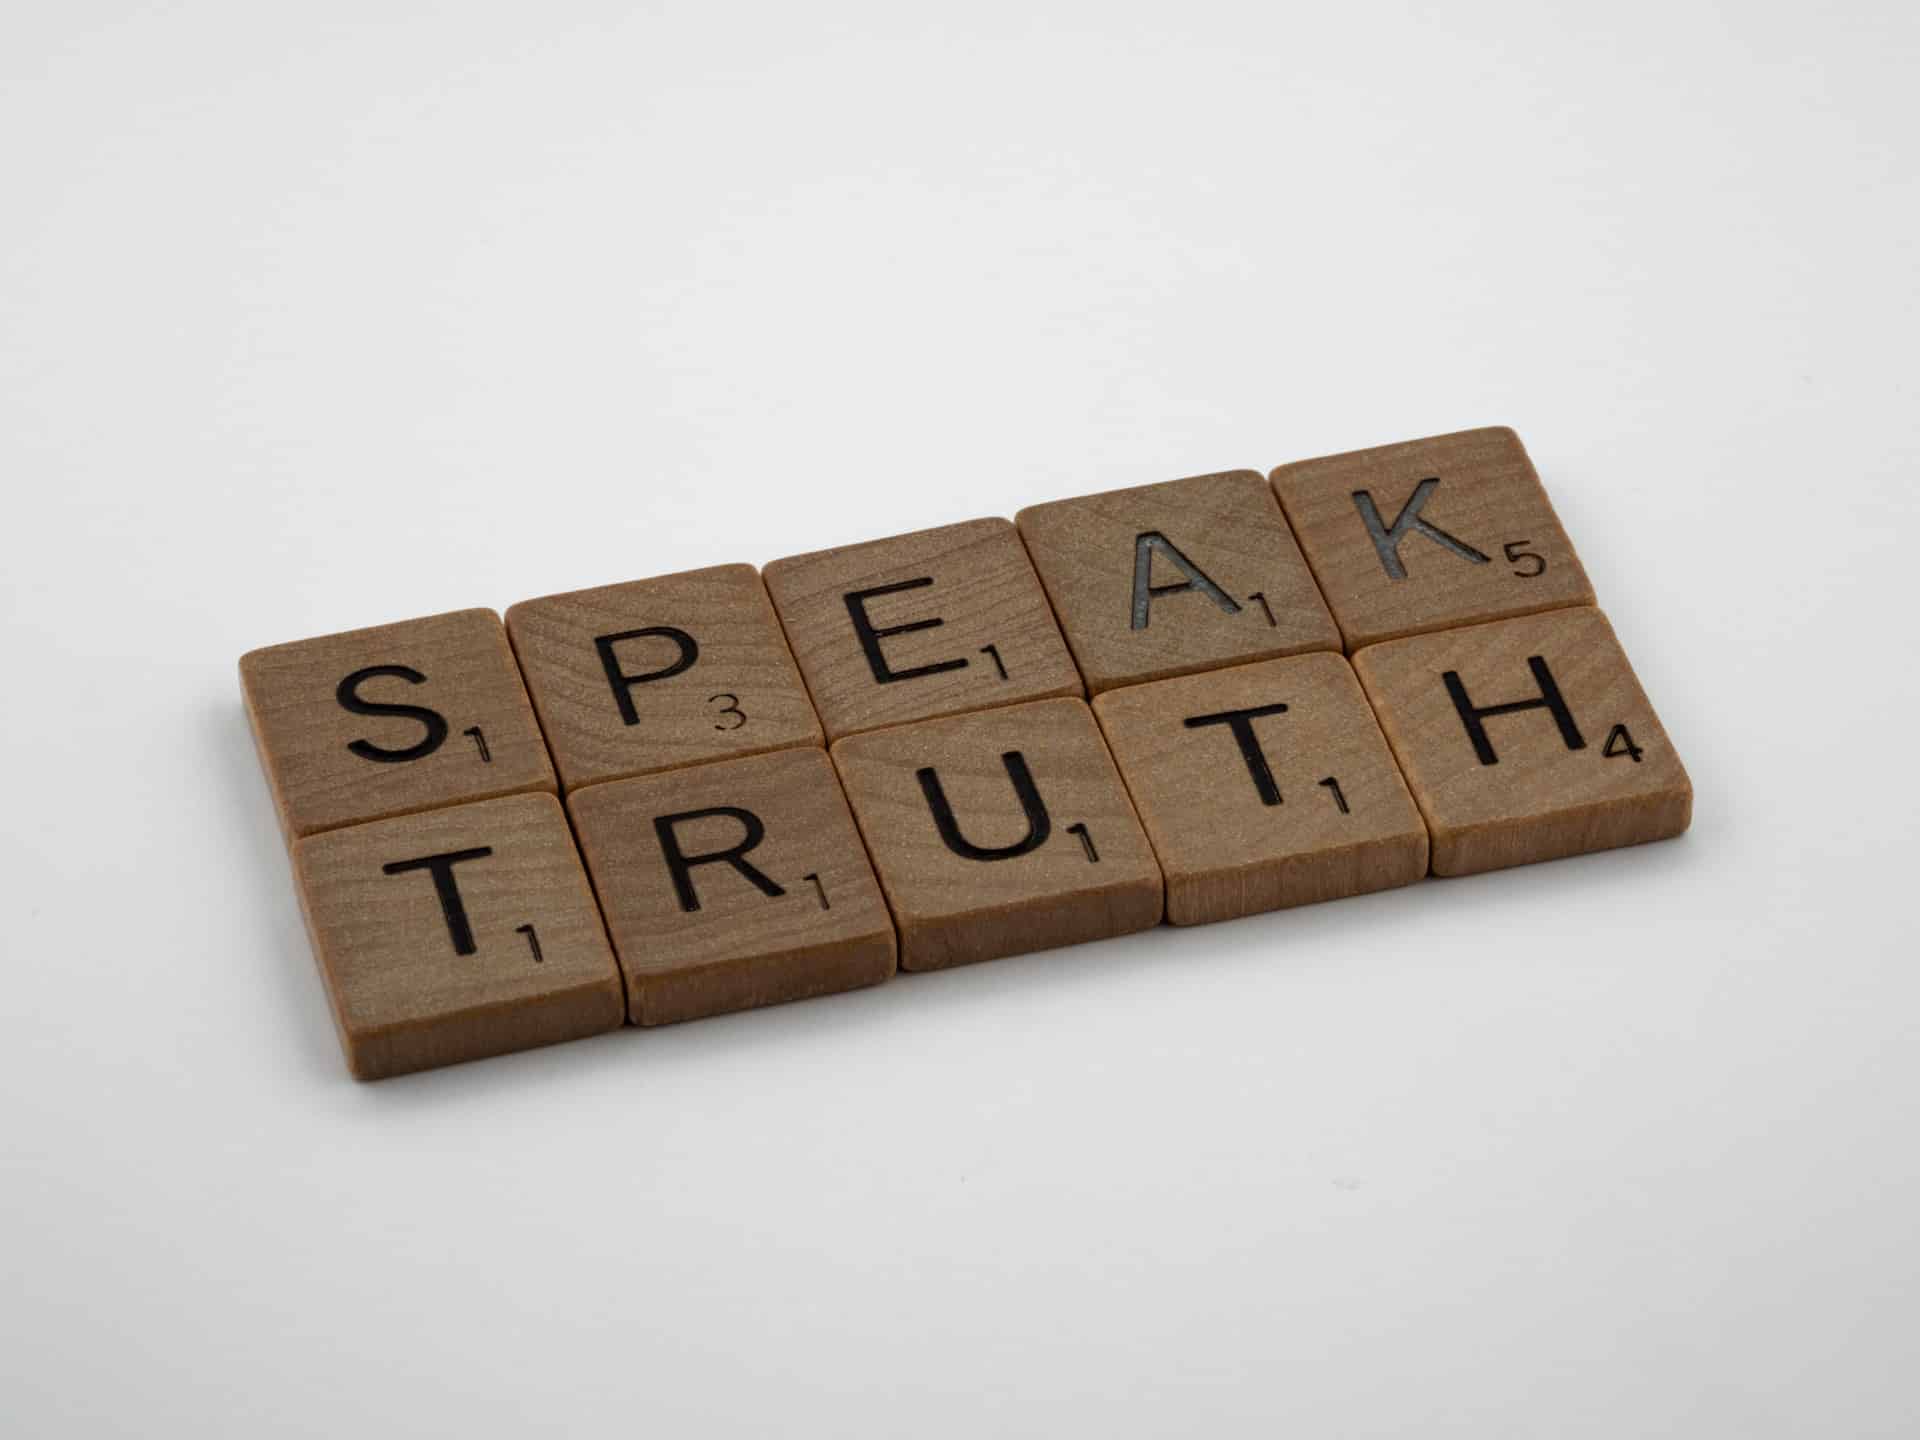 speak truth spelled out in scrabble tiles - perjury in arizona